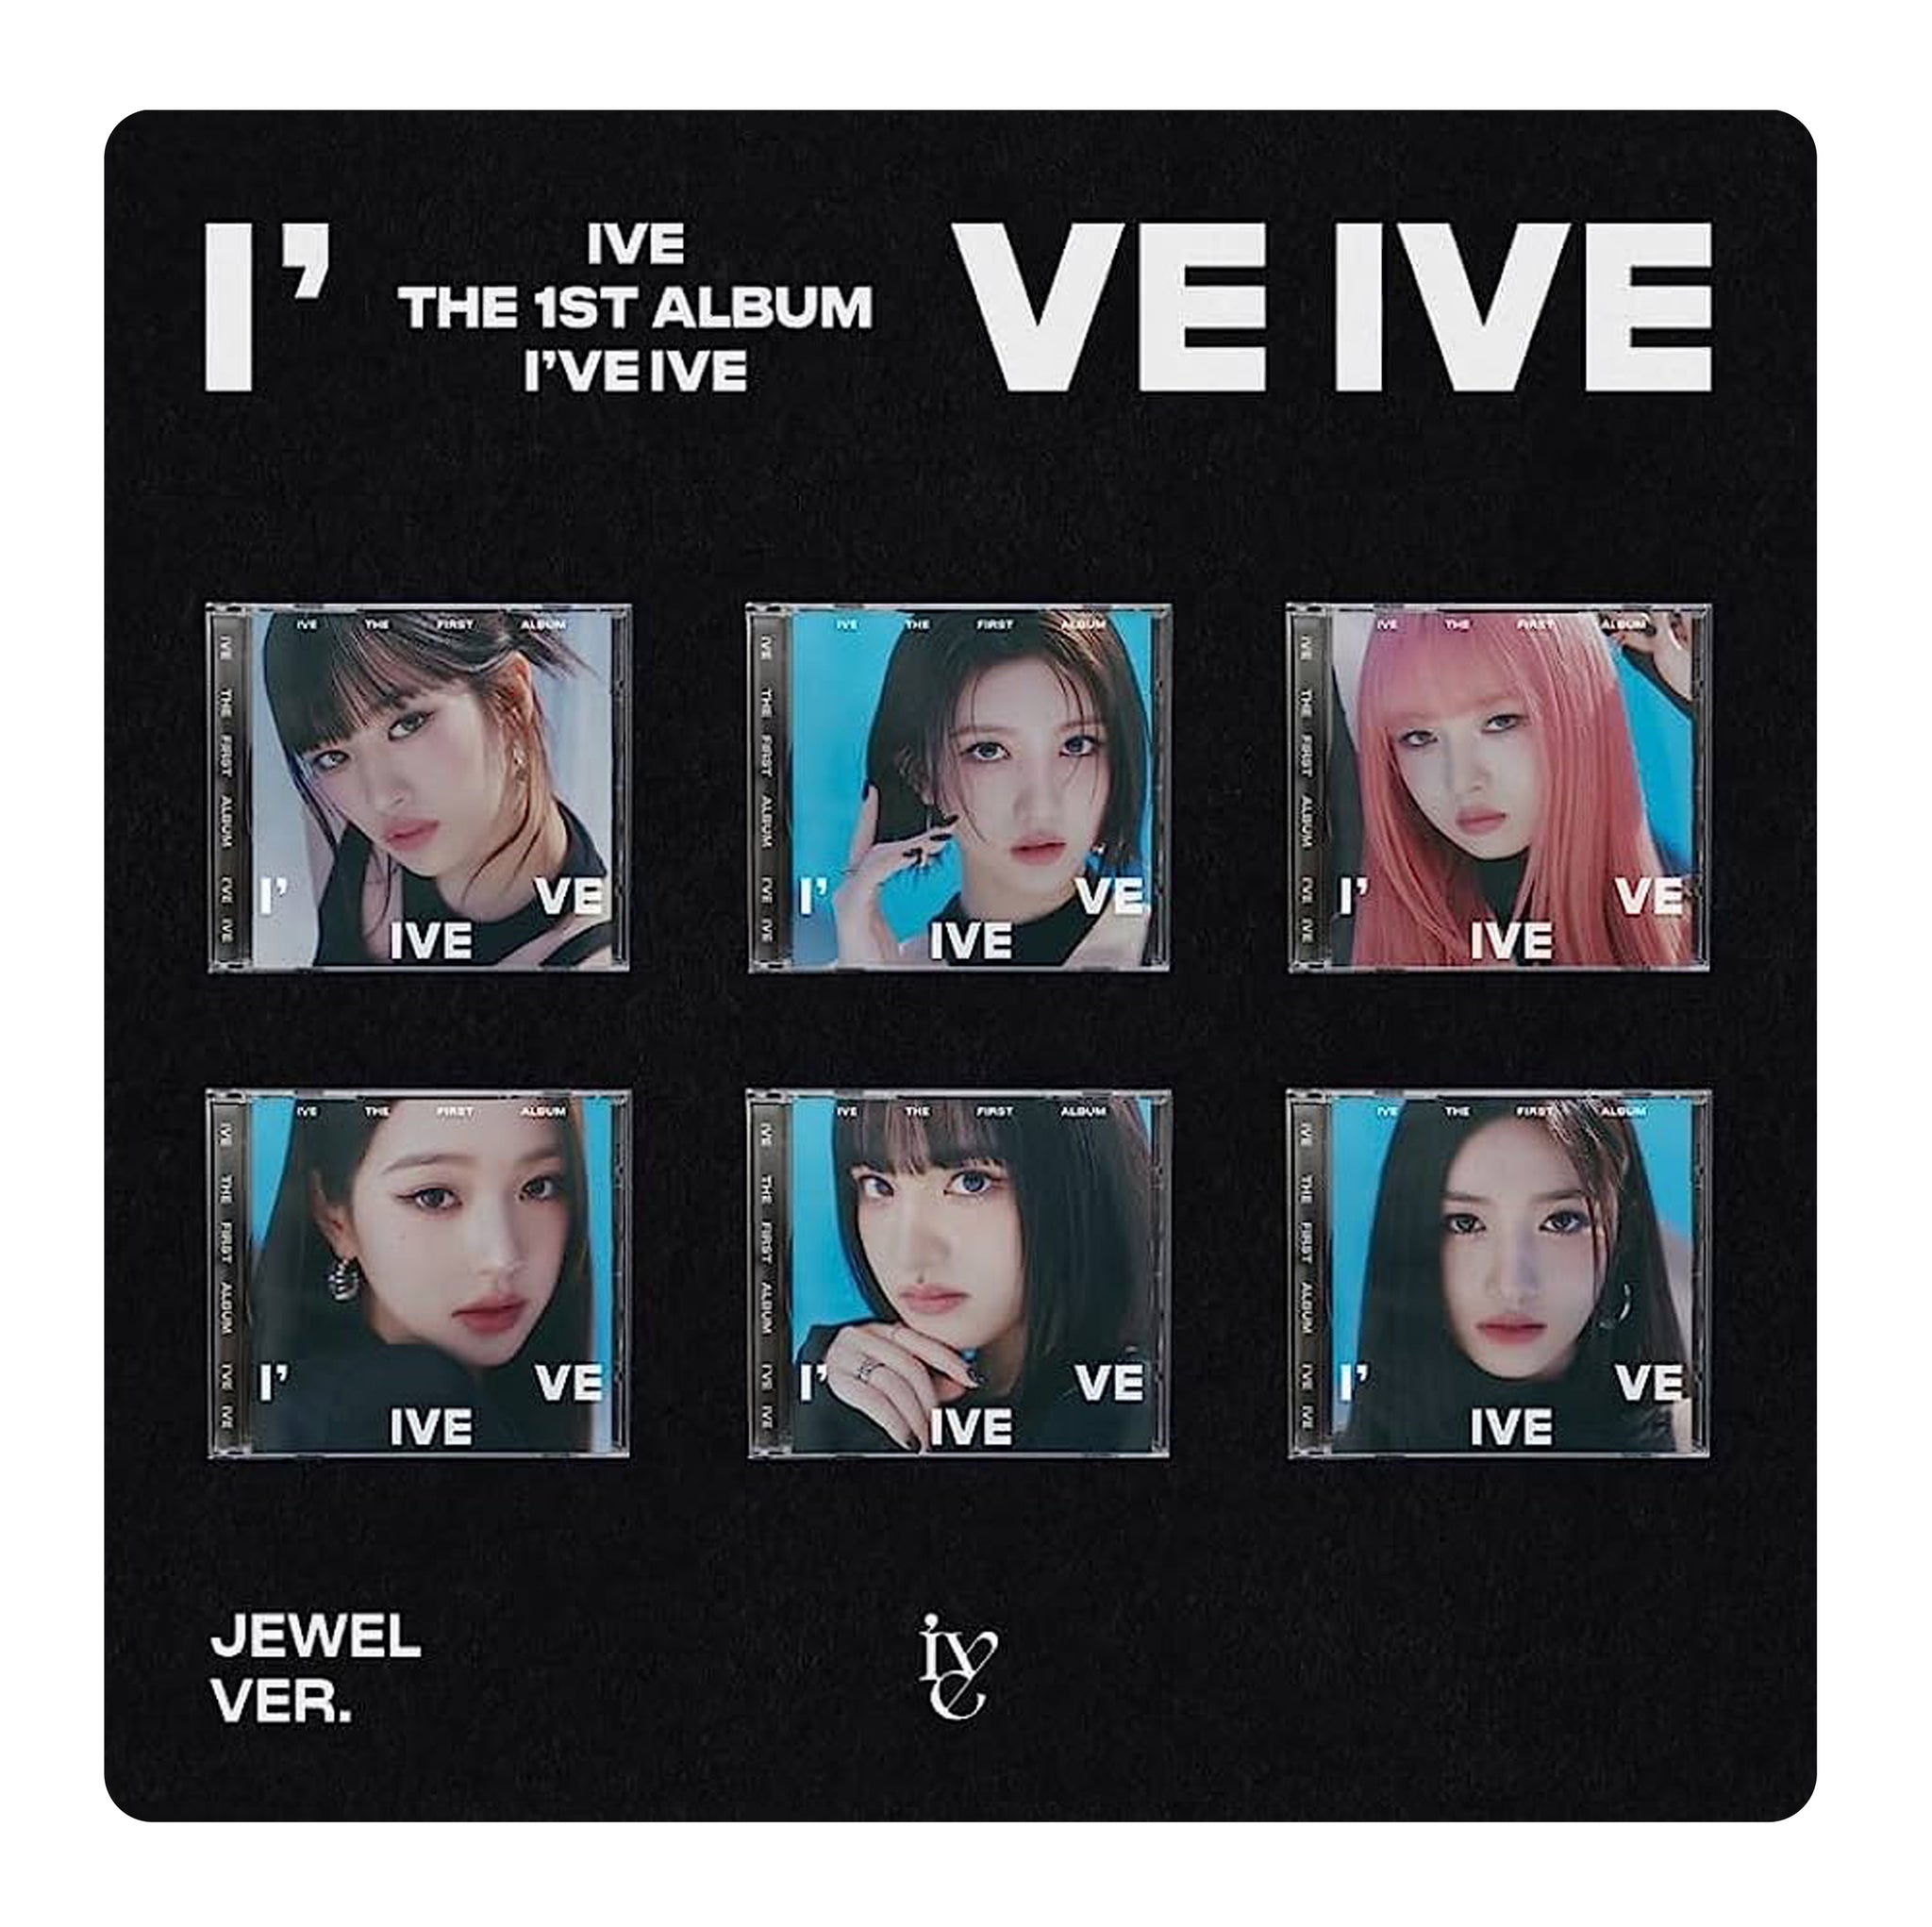 IVE - I've IVE Jewel Ver.